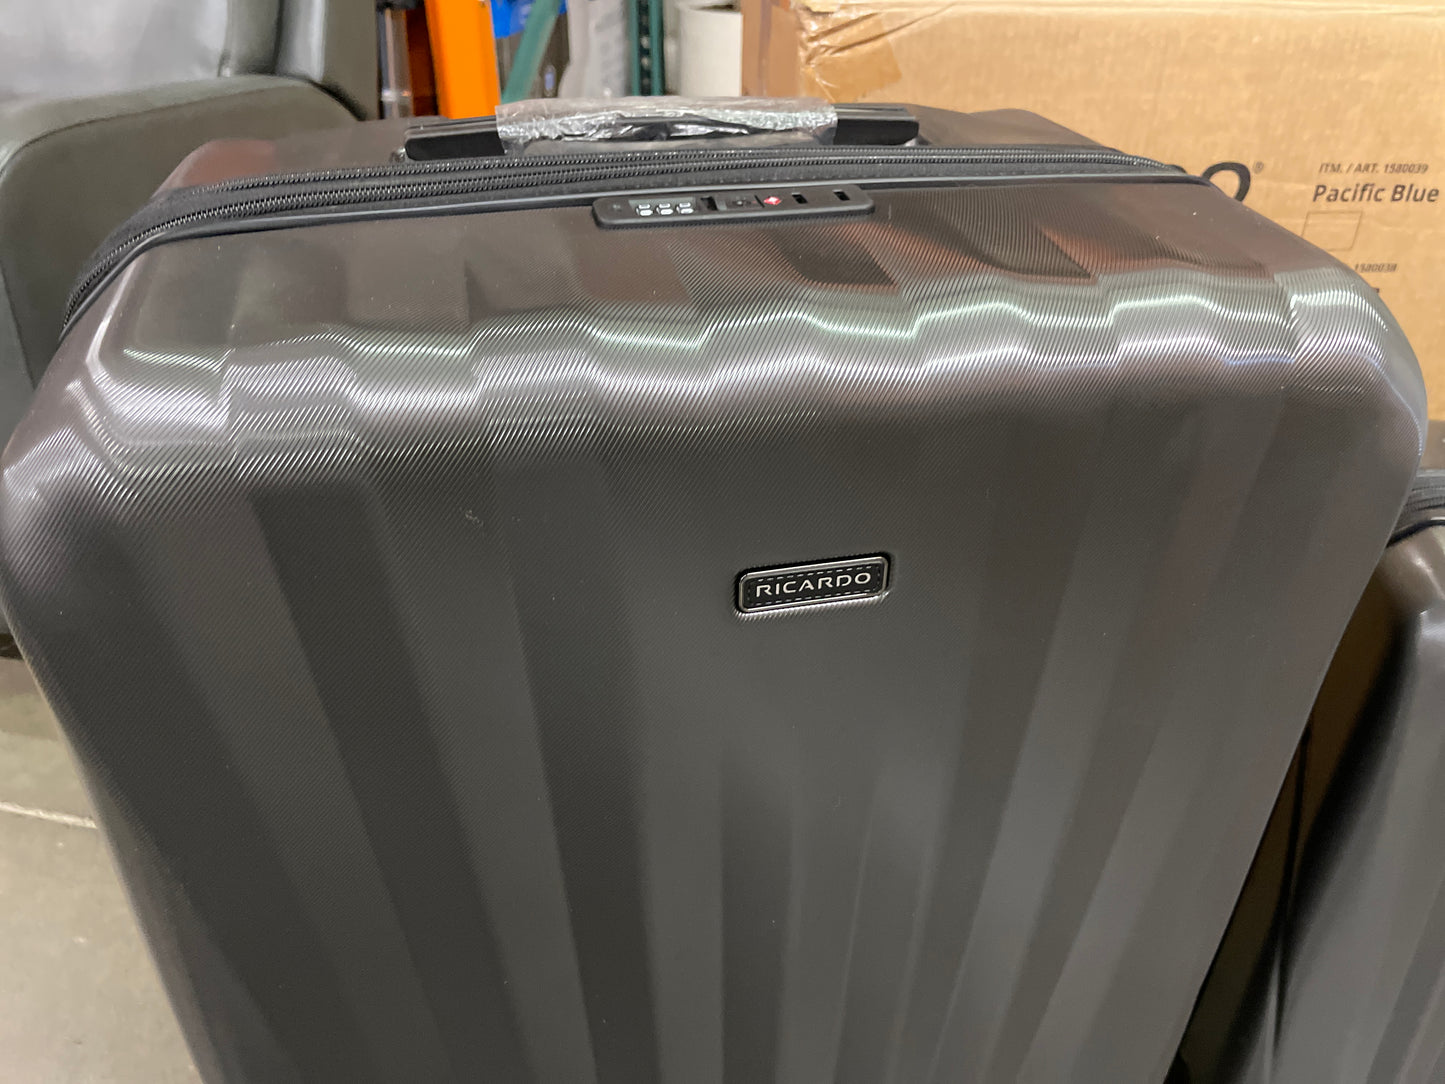 NEW - Costco - Ricardo 2-piece Hardside Luggage Set - Retail $164